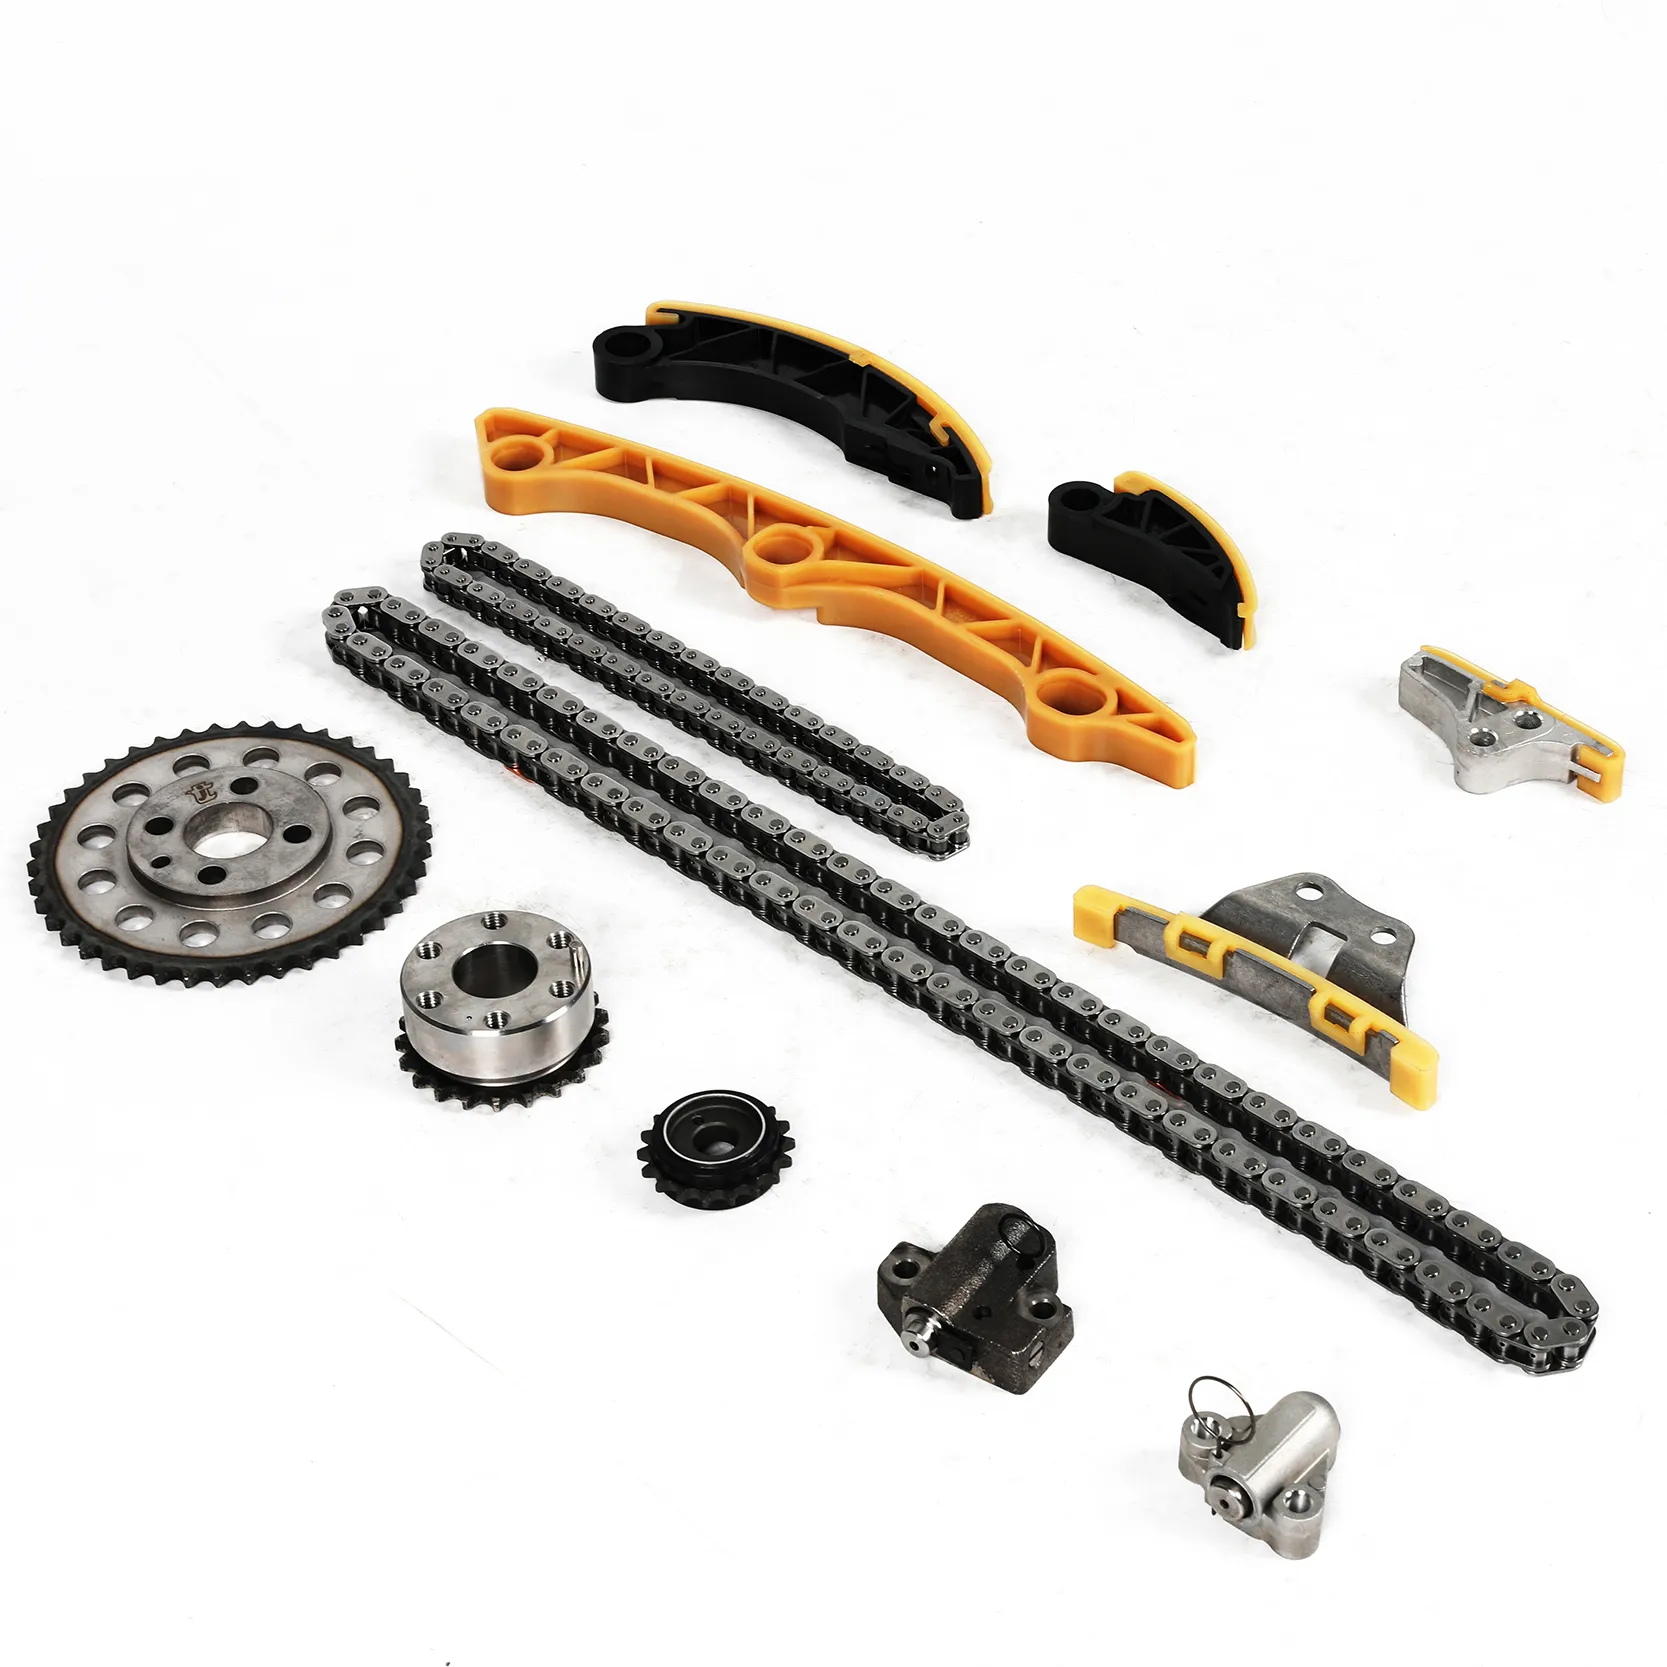 Kit de reparación para camioneta Mazda, cadena de distribución de motor, CX-7, 2.2L